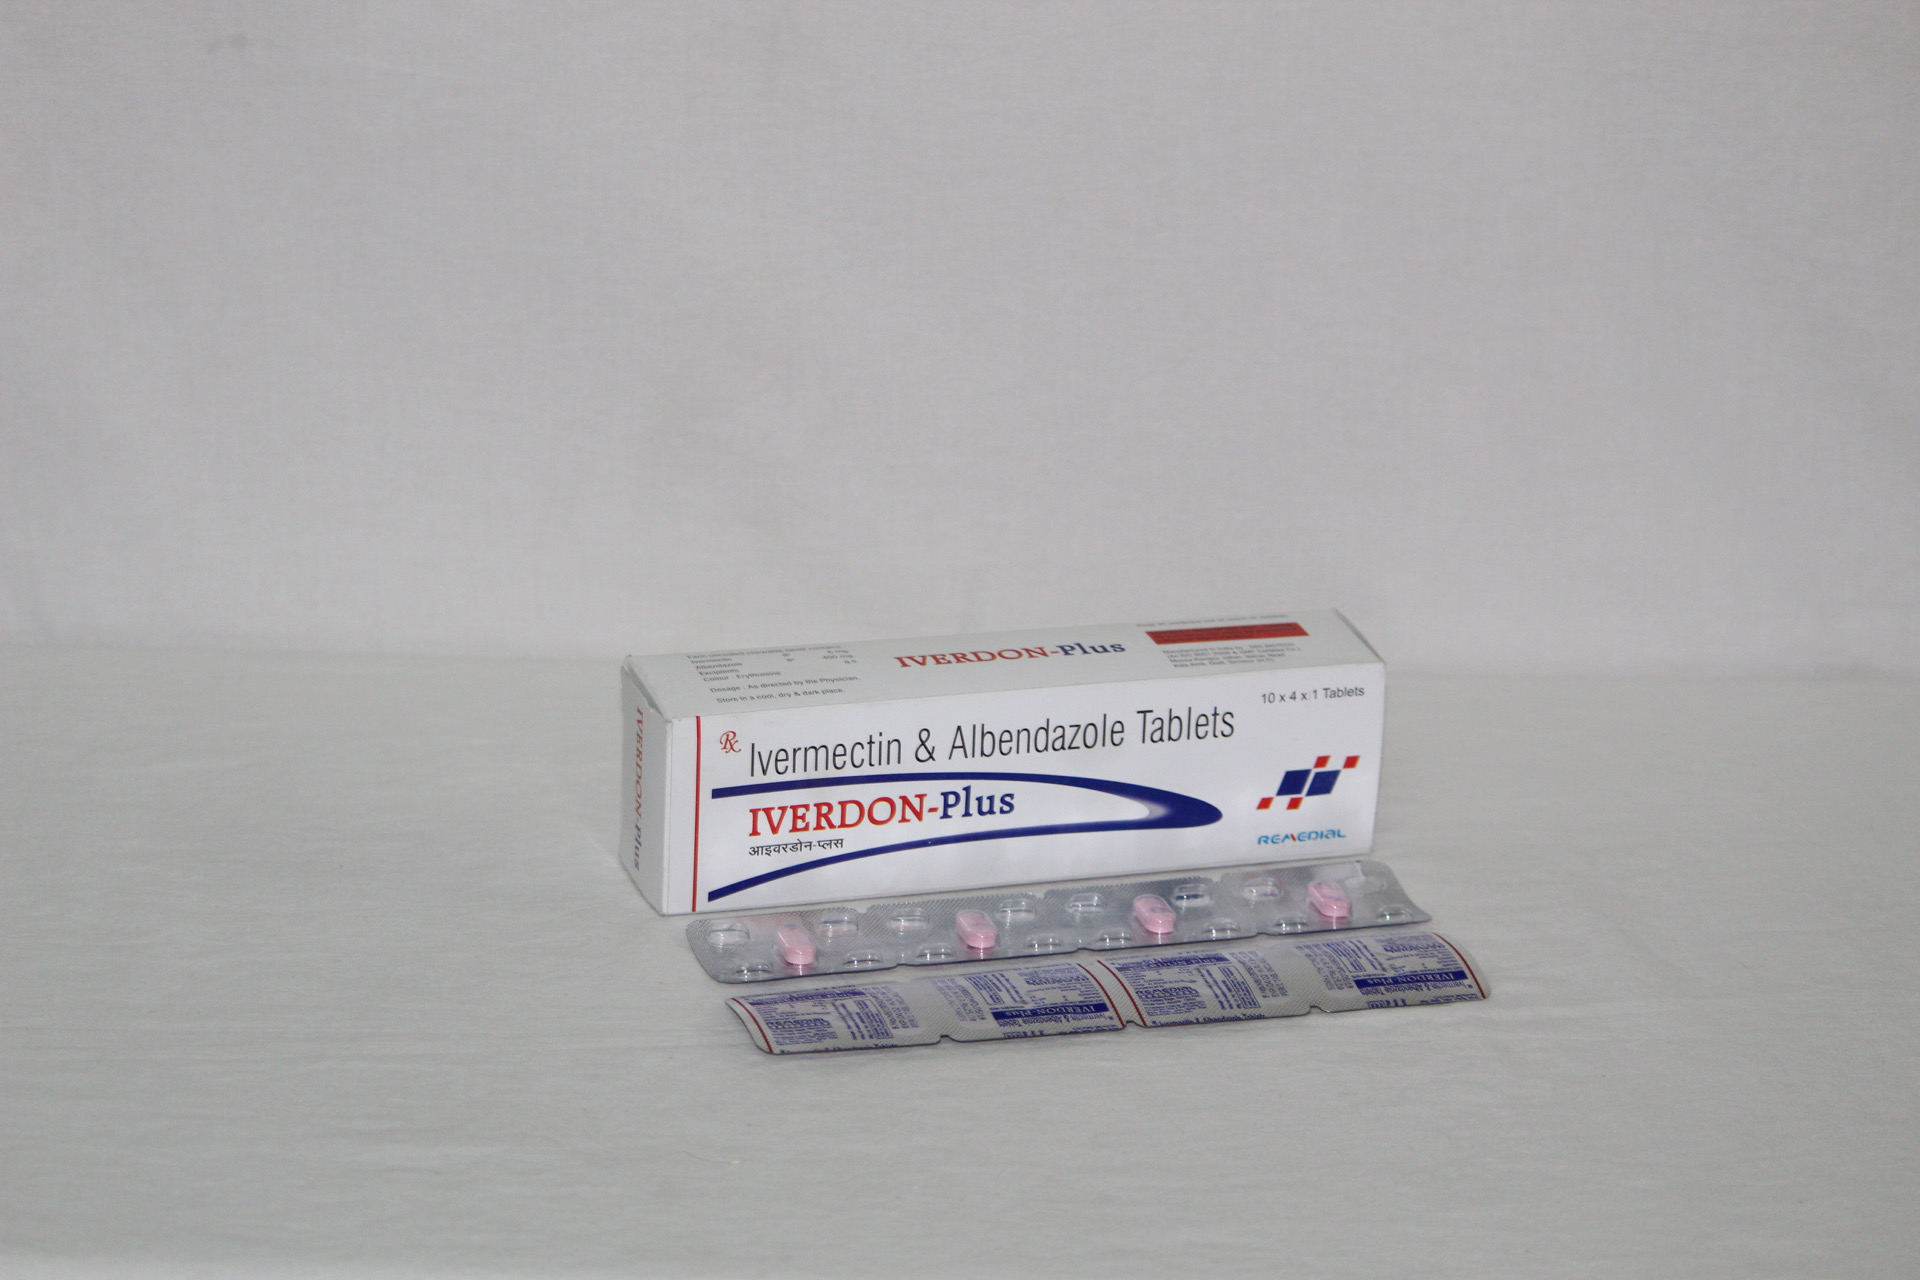 IVERDON-PLUS (Ivermactin 6 mg + Albendazole 400mg)